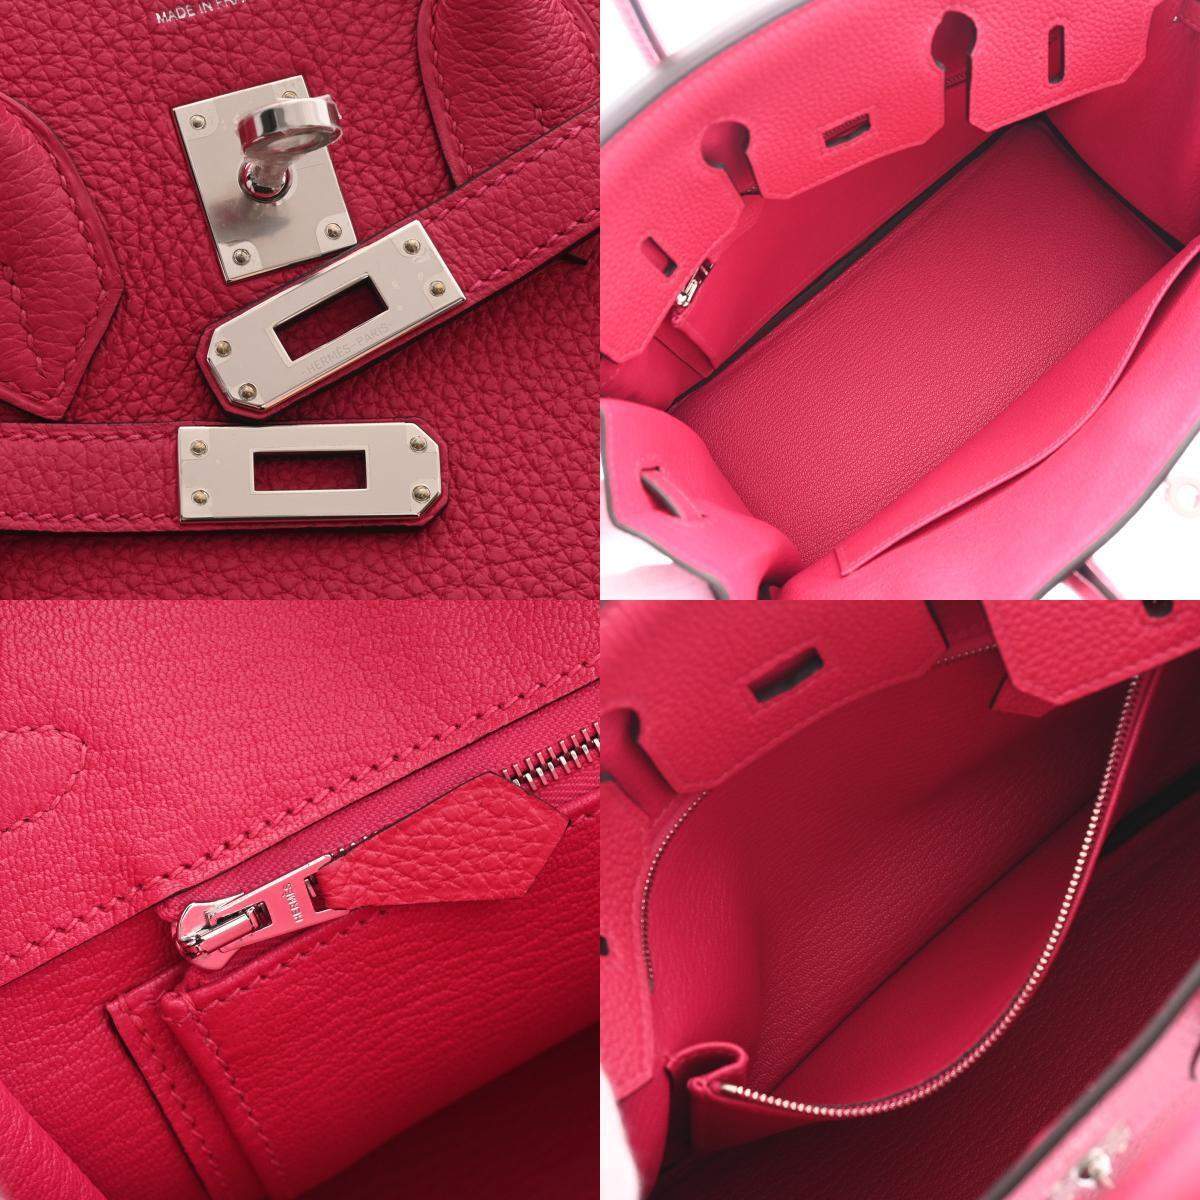 Hermes Kelly Handbag Pink Togo with Palladium Hardware 25 Pink 2326381